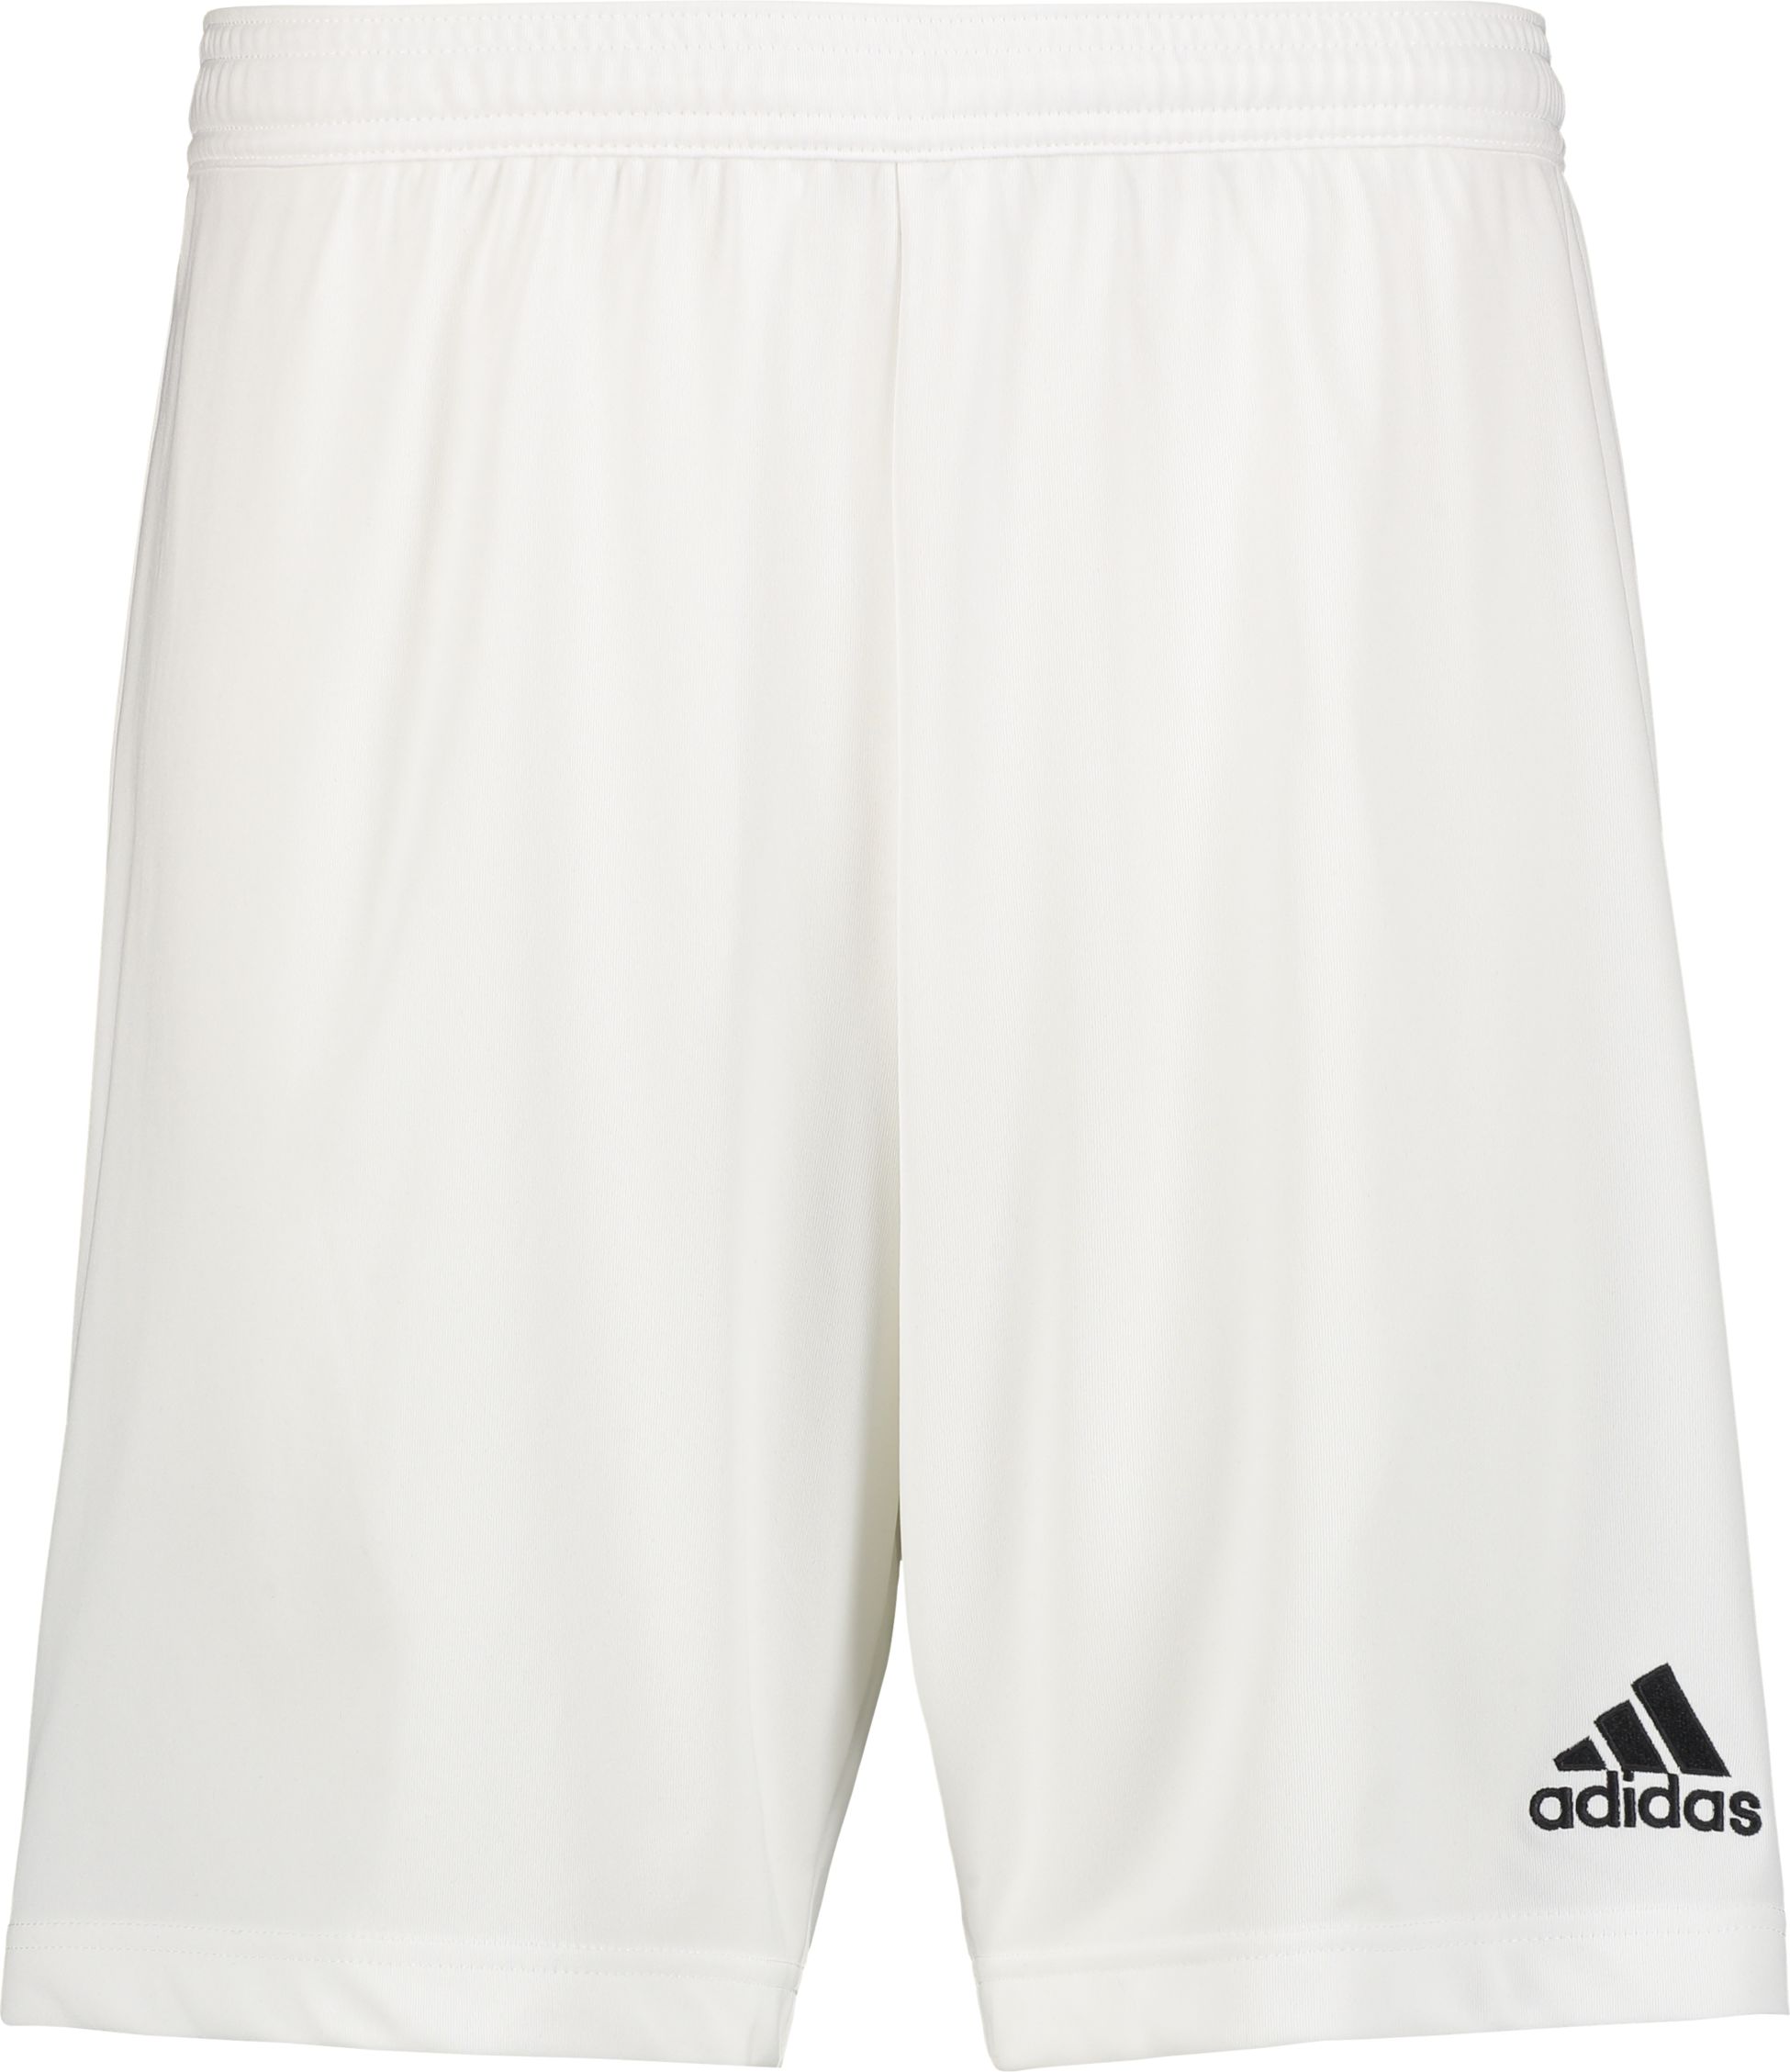 Adidas Ent22 shorts